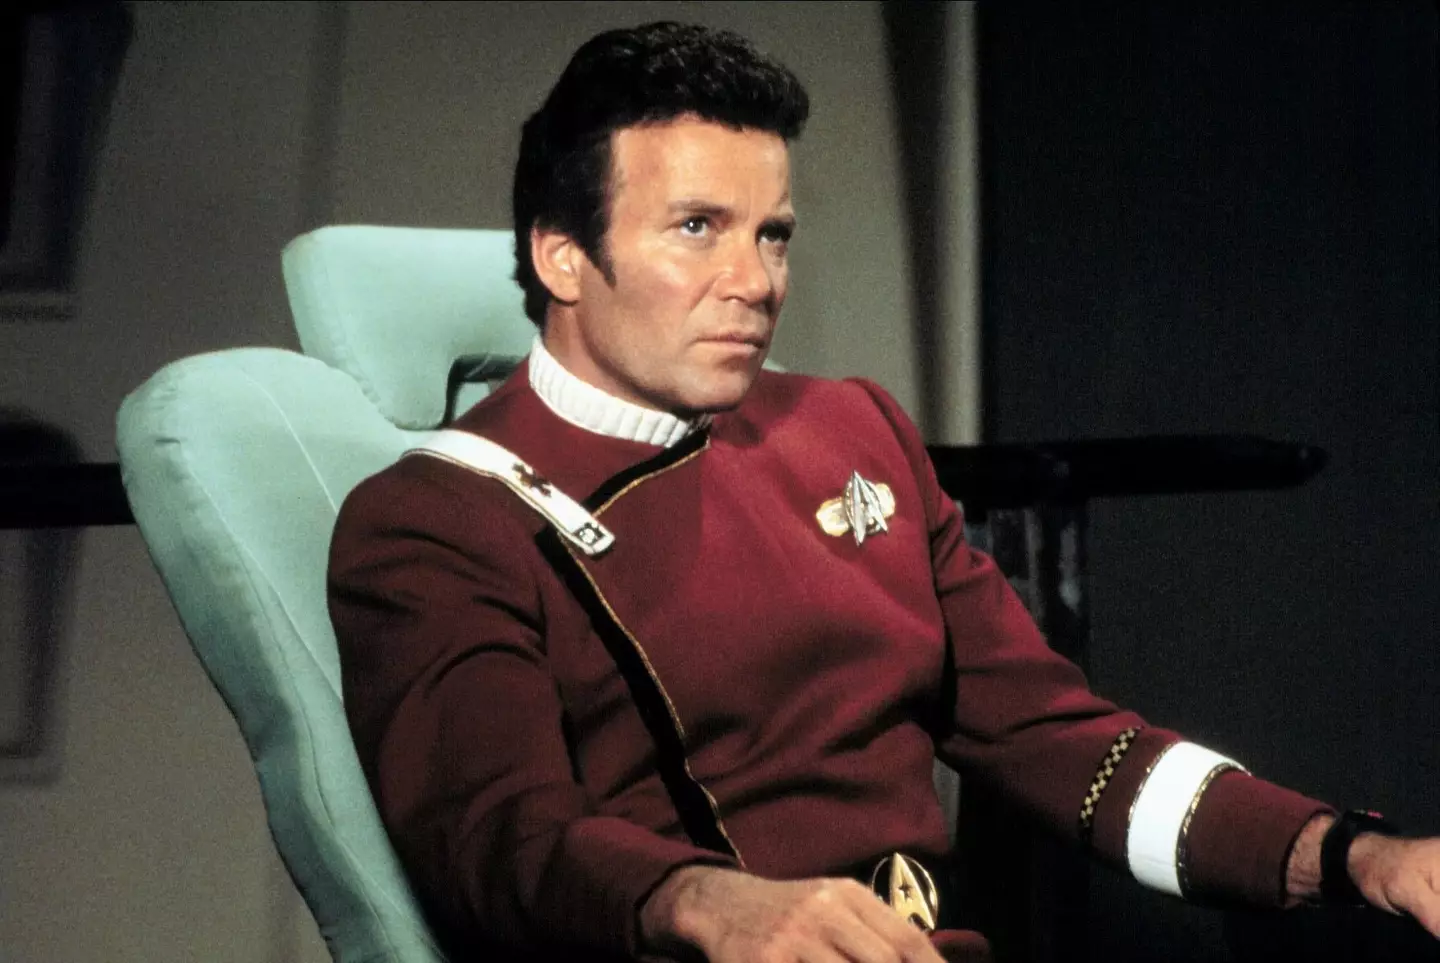 Shatner played Captain Kirk in Star Trek.